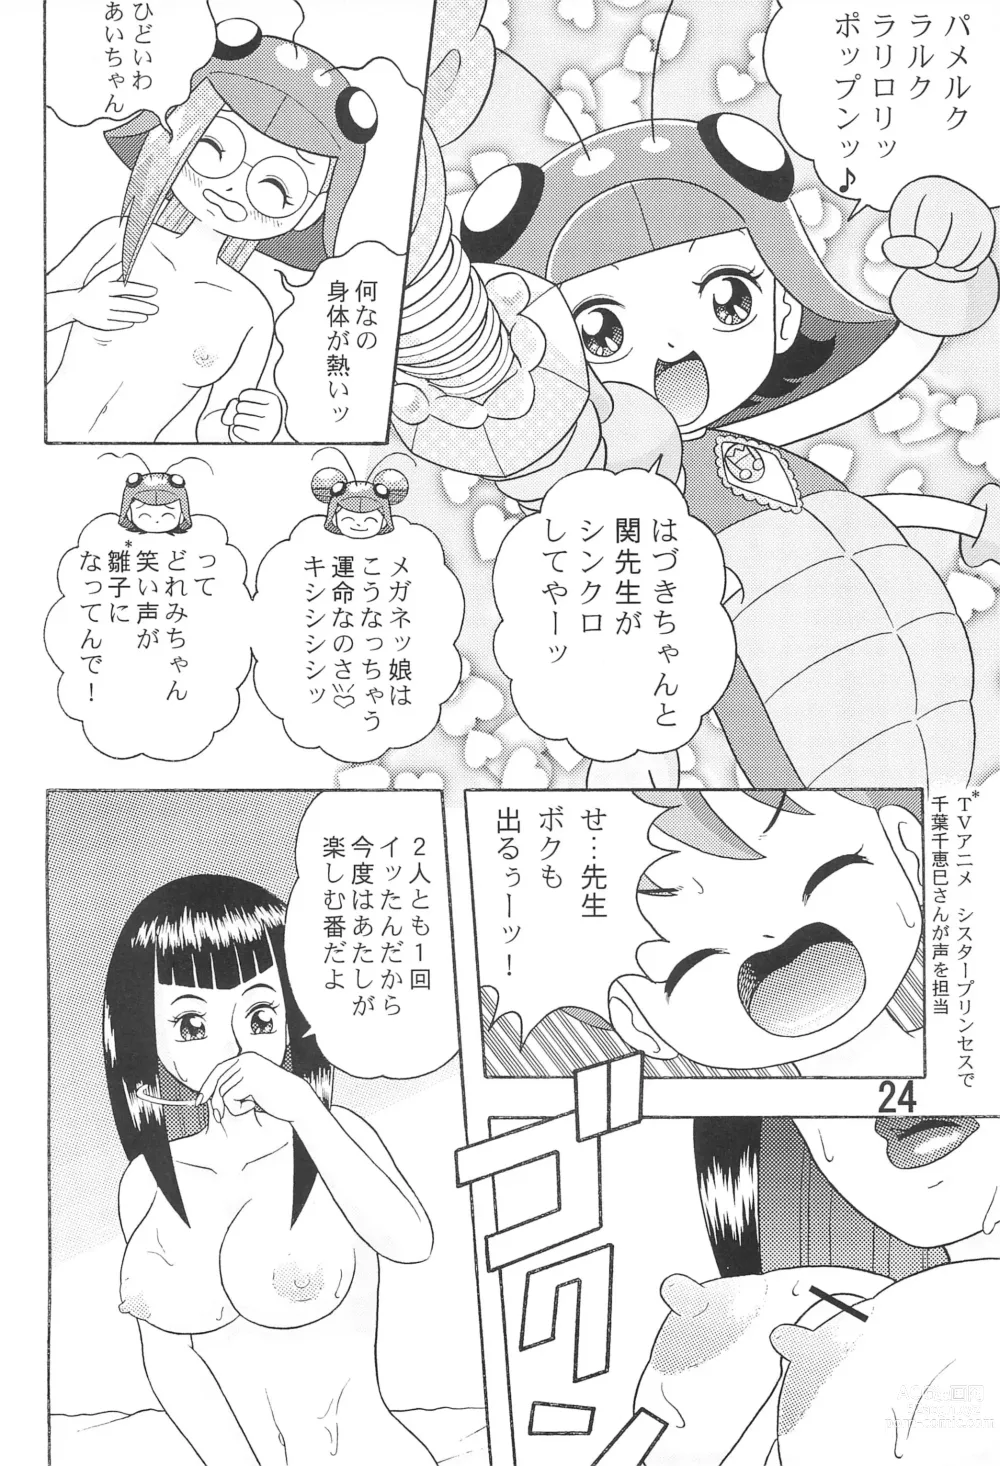 Page 26 of doujinshi 5 Nen 1 Kumi Mahougumi 2